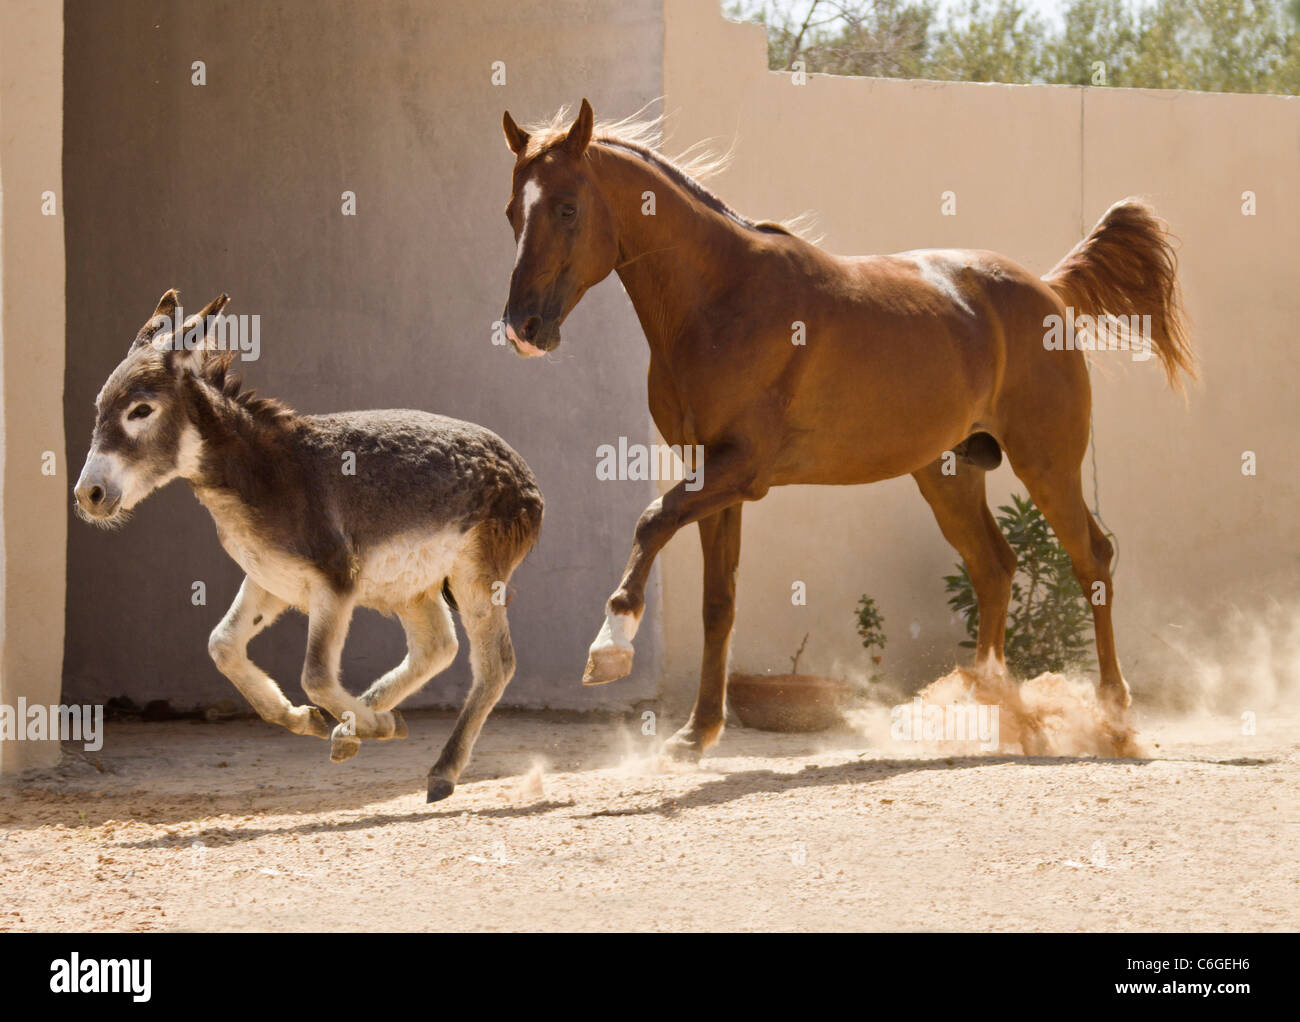 animal friendship : Arabian horse and 